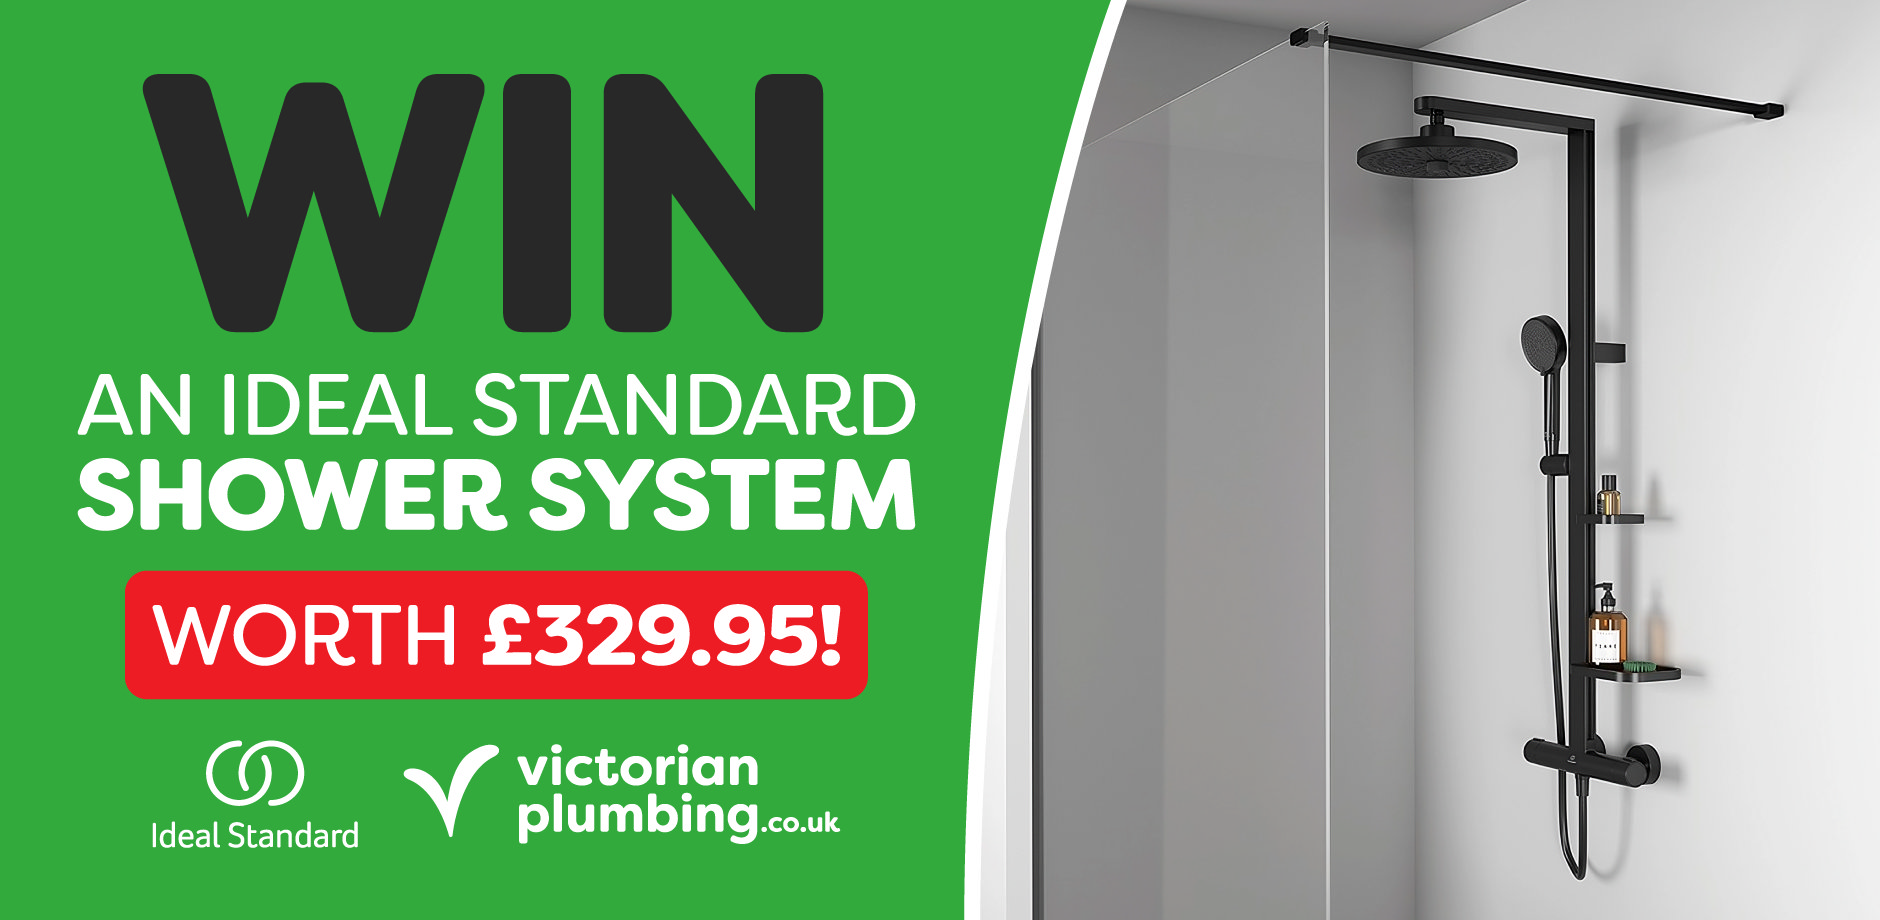 Win a Ideal Standard Shower System